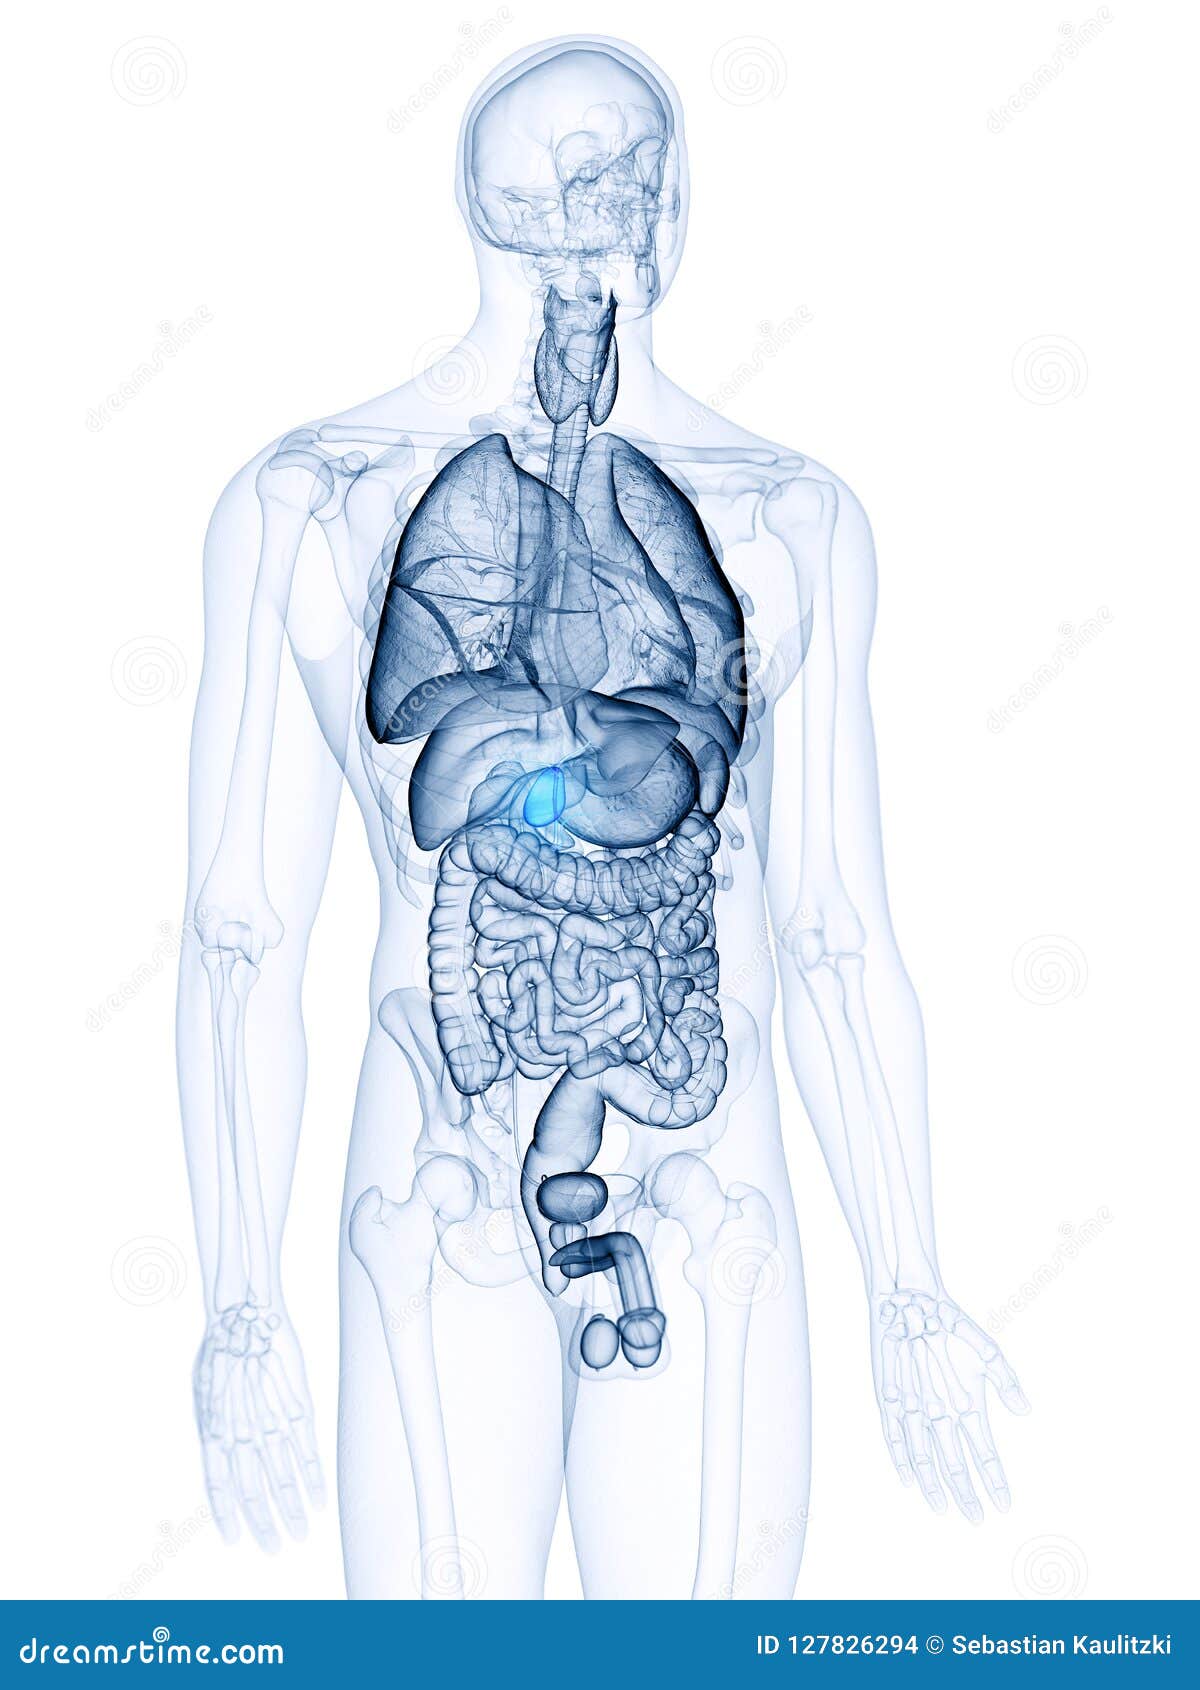 The gallbladder stock illustration. Illustration of inside - 127826294